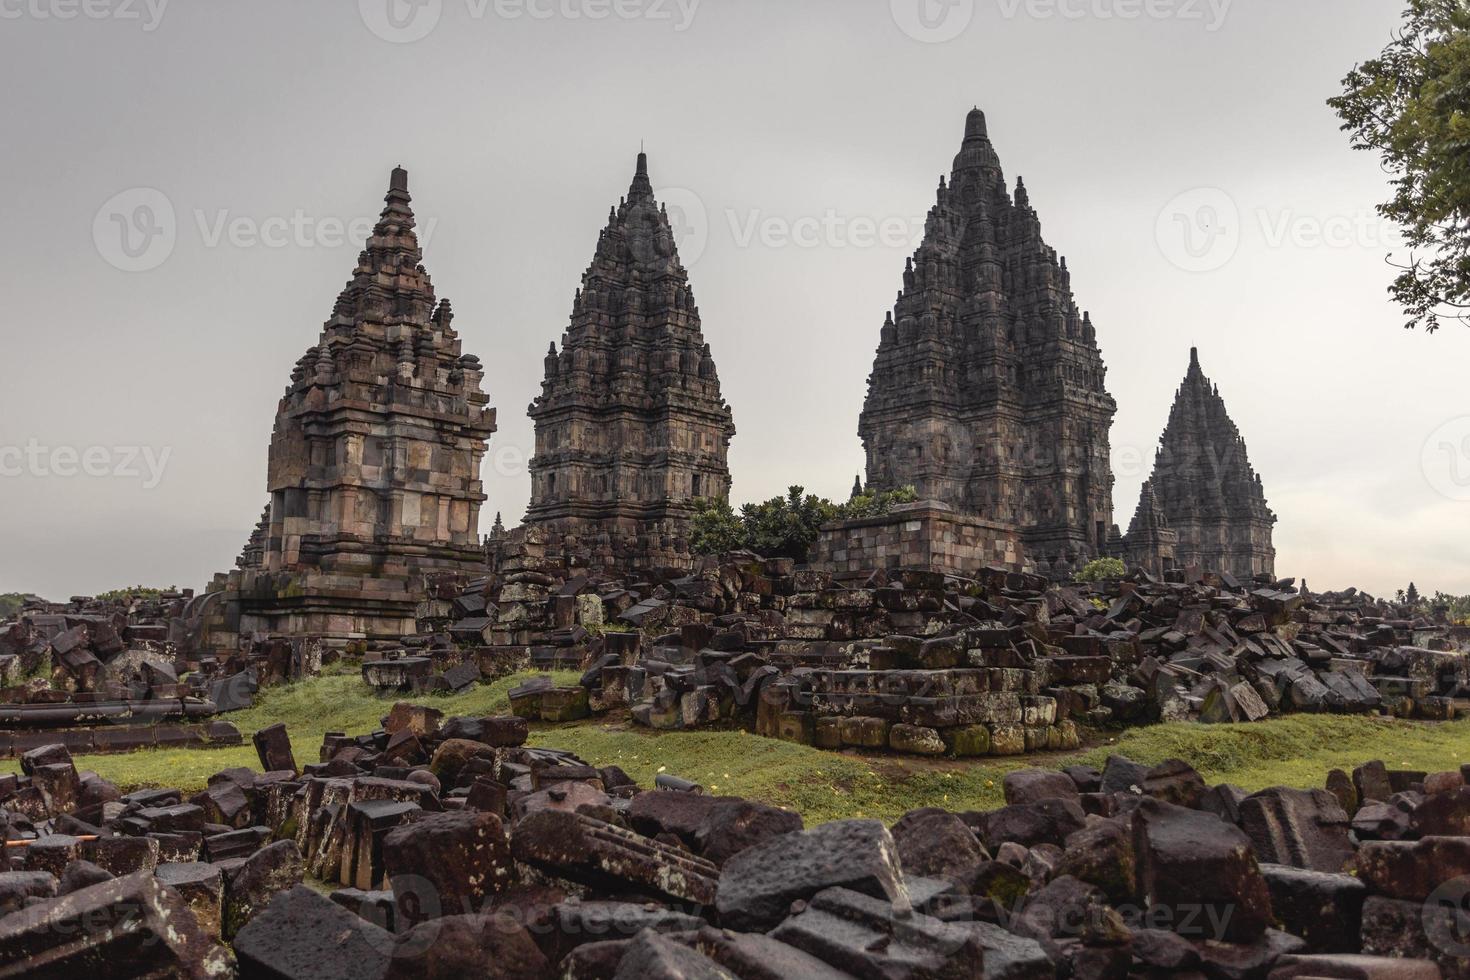 take a look at this beautiful prambanan temple photo